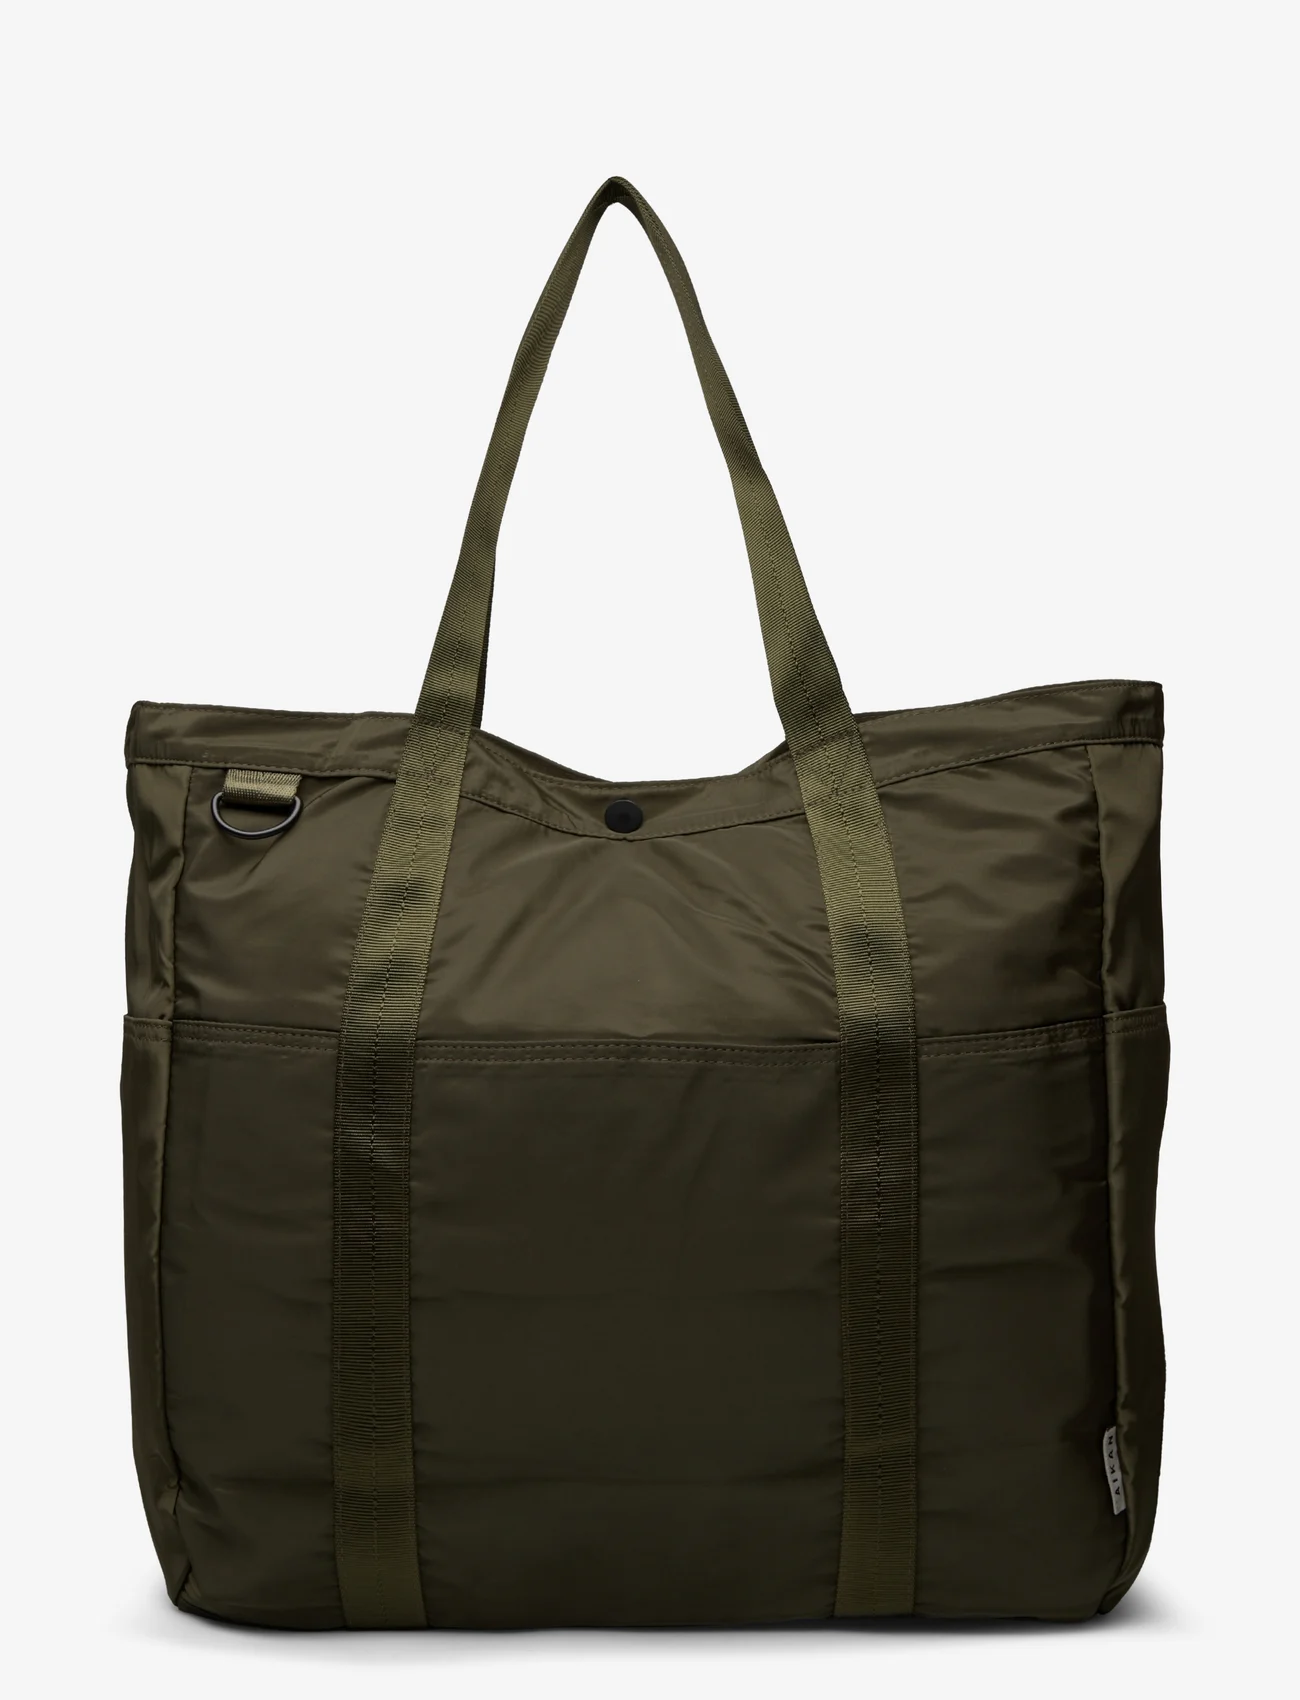 Taikan - Sherpa - handlenett & tote bags - olive - 1